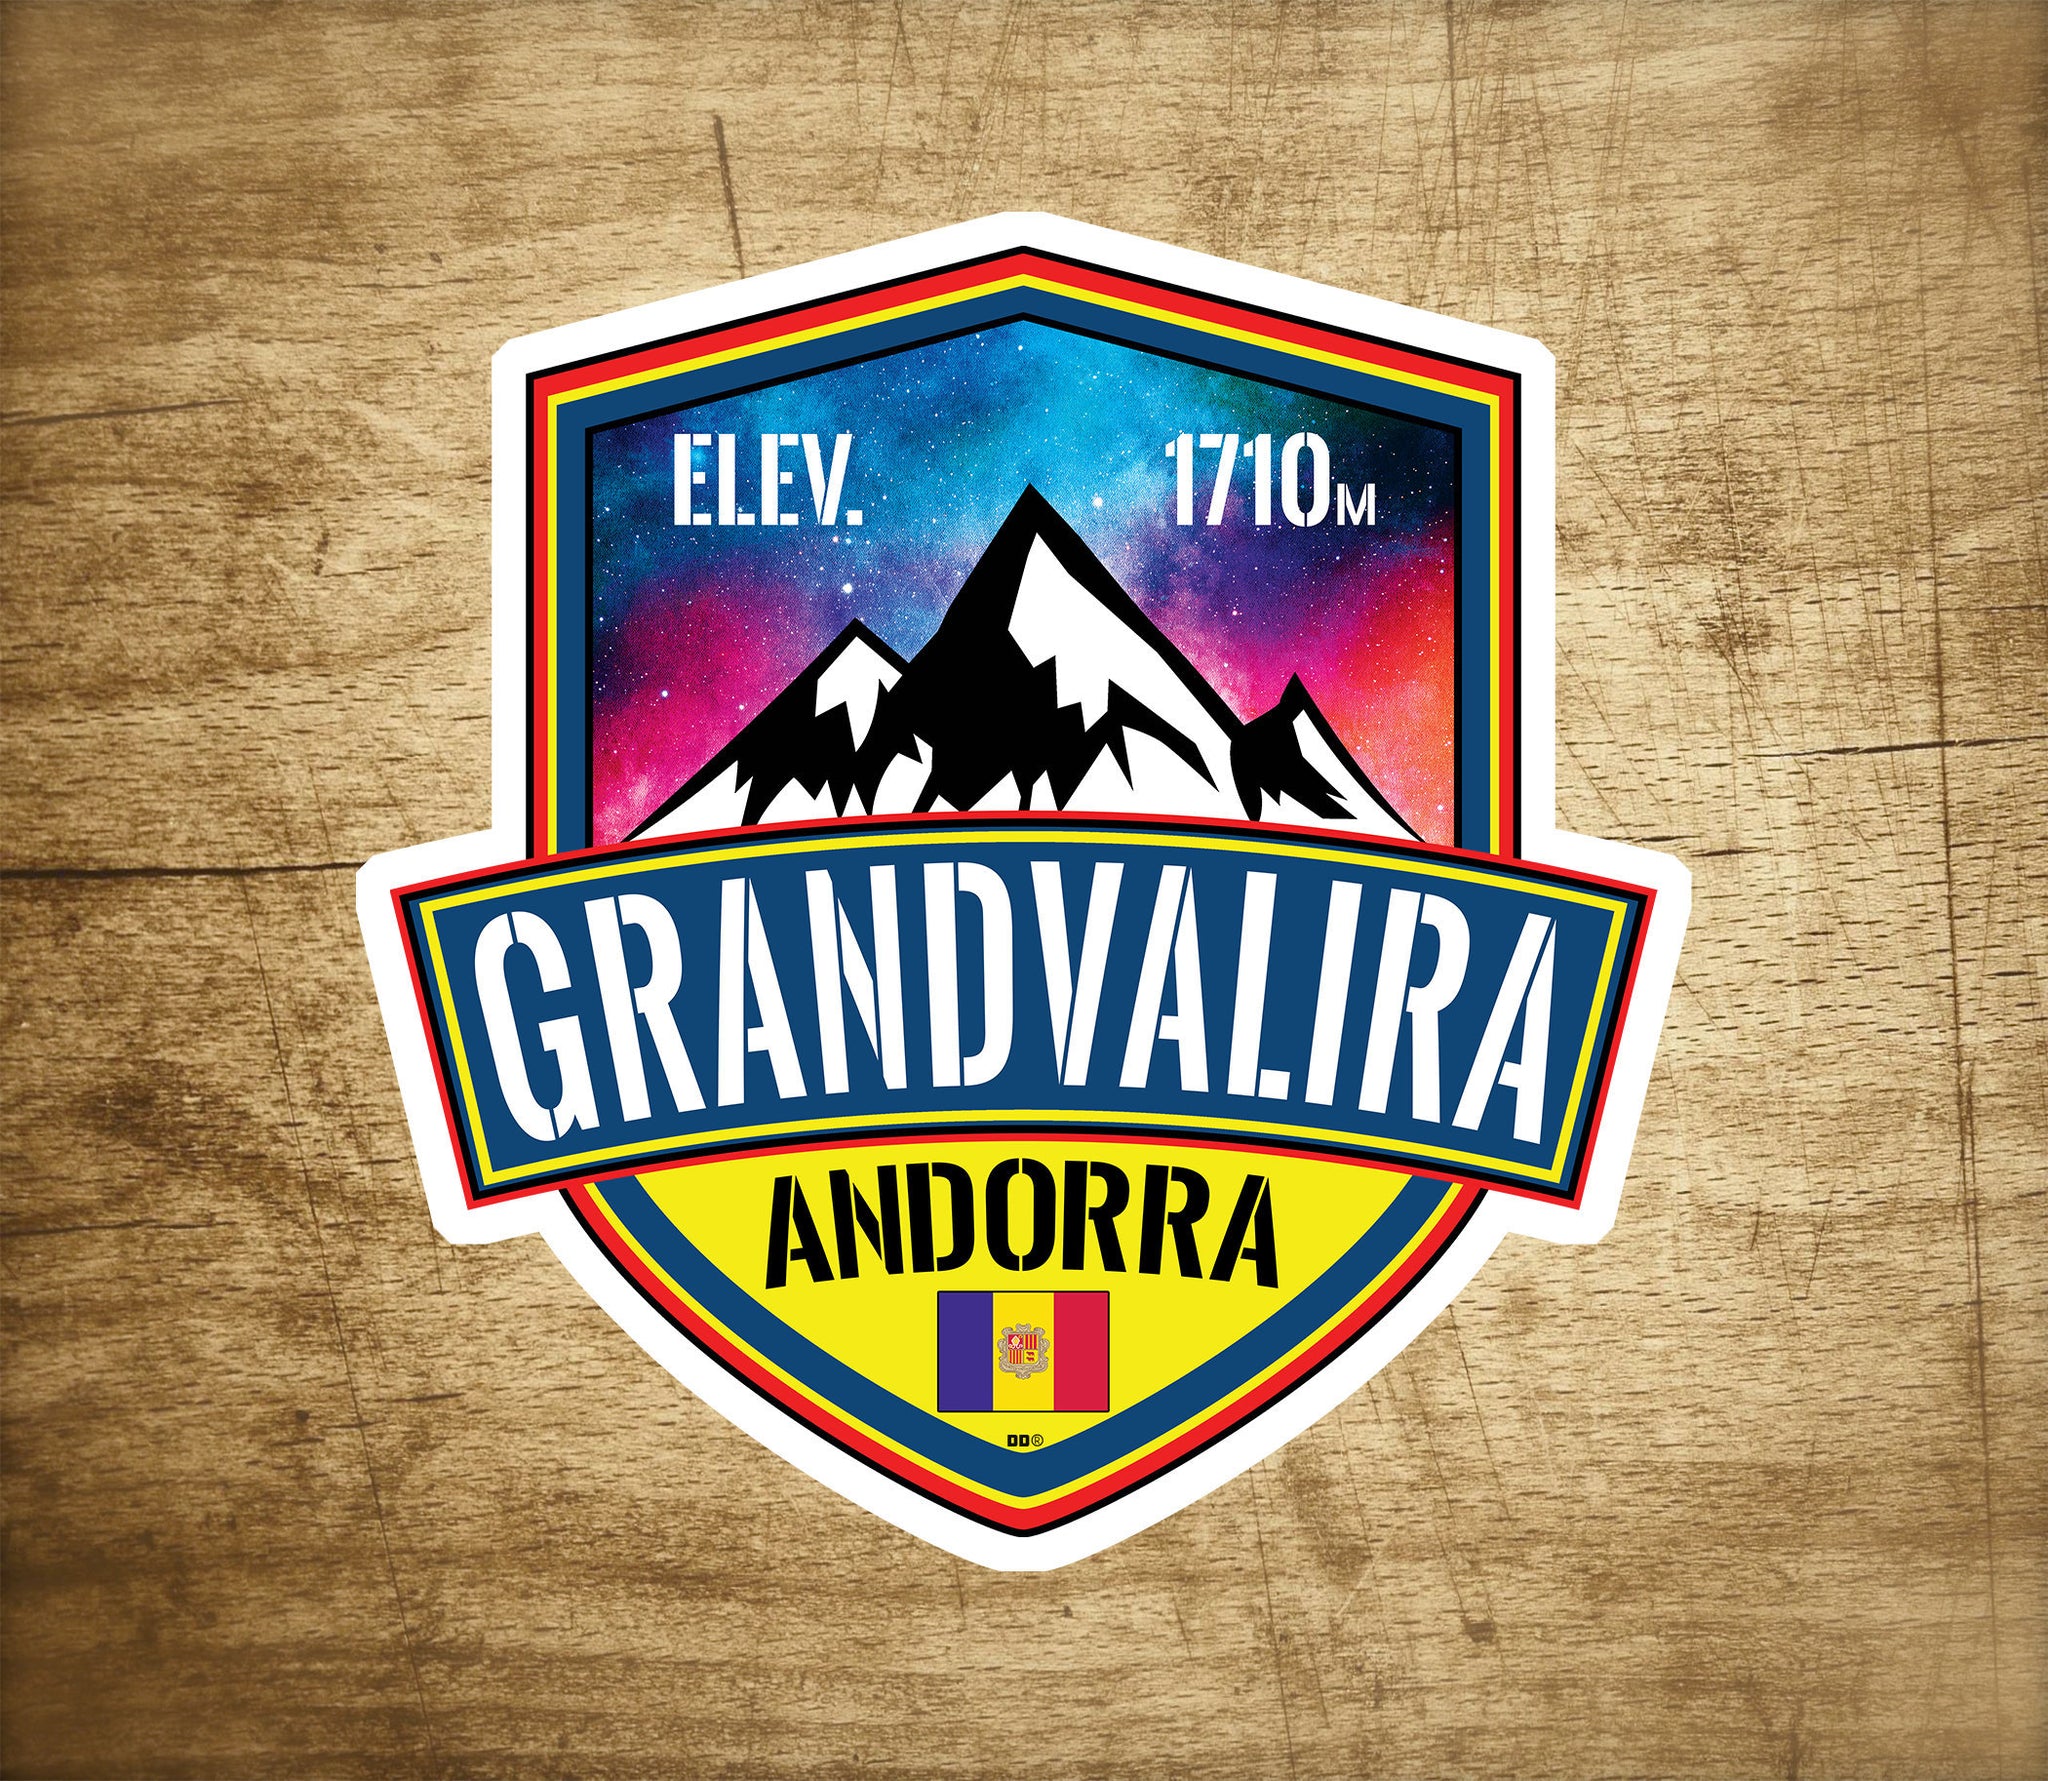 Ski Grandvalira Andorra Decal 3" Sticker Skiing Canillo Pyrenees